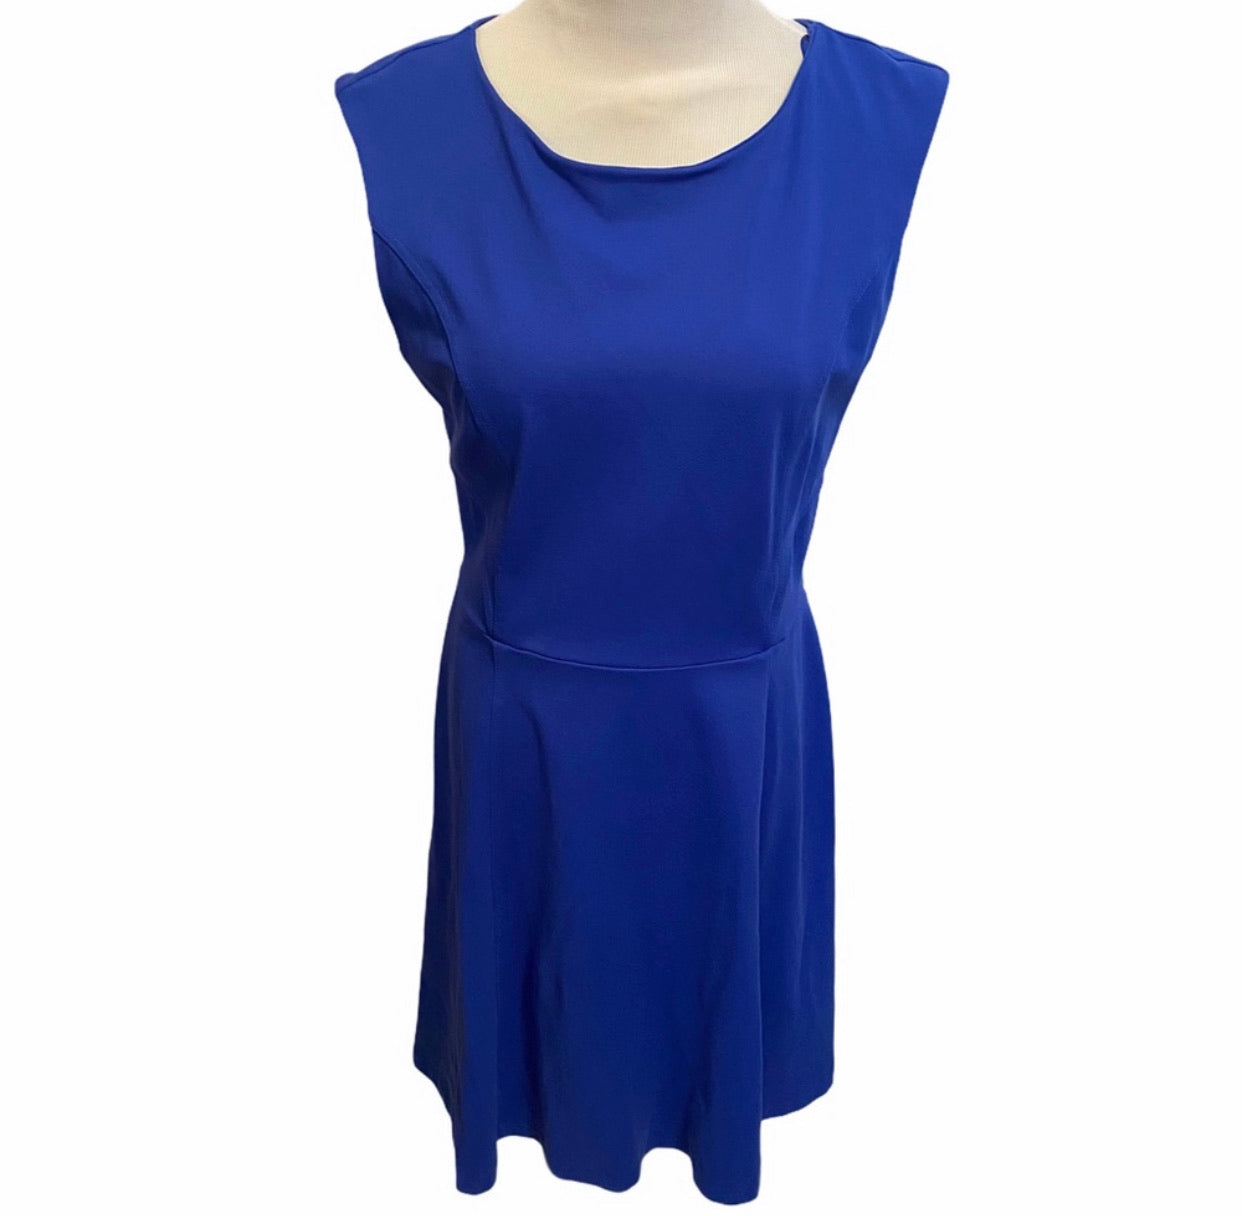 Blue dress size 6